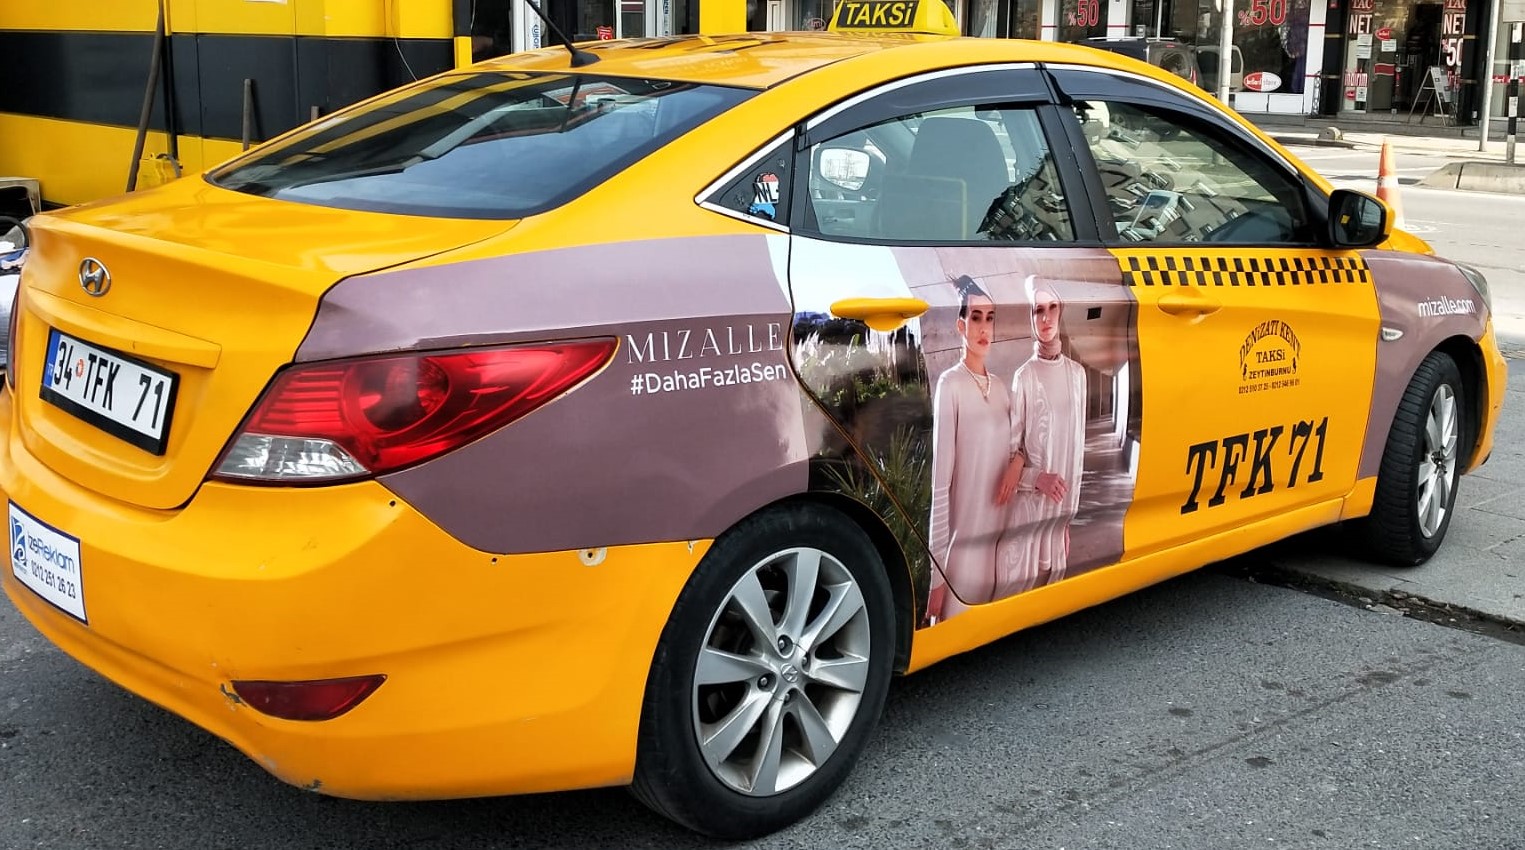 Taksi Reklam